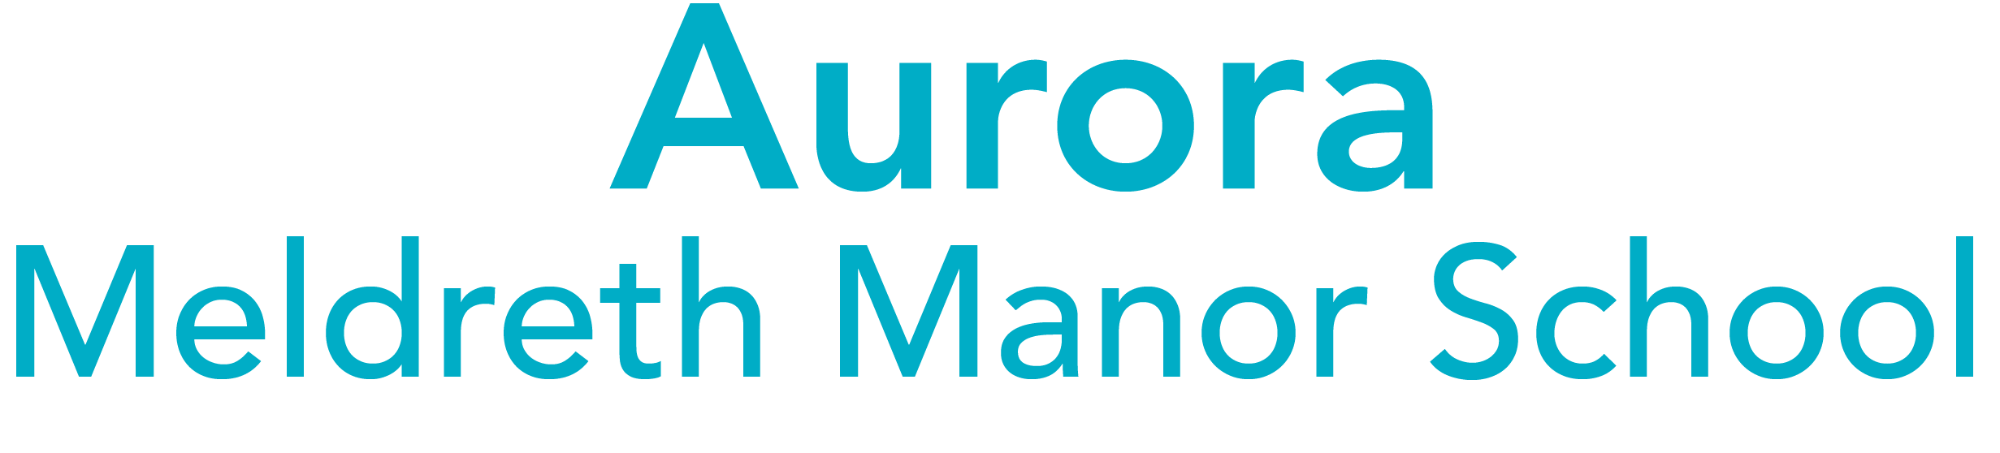 Aurora Meldreth Manor School